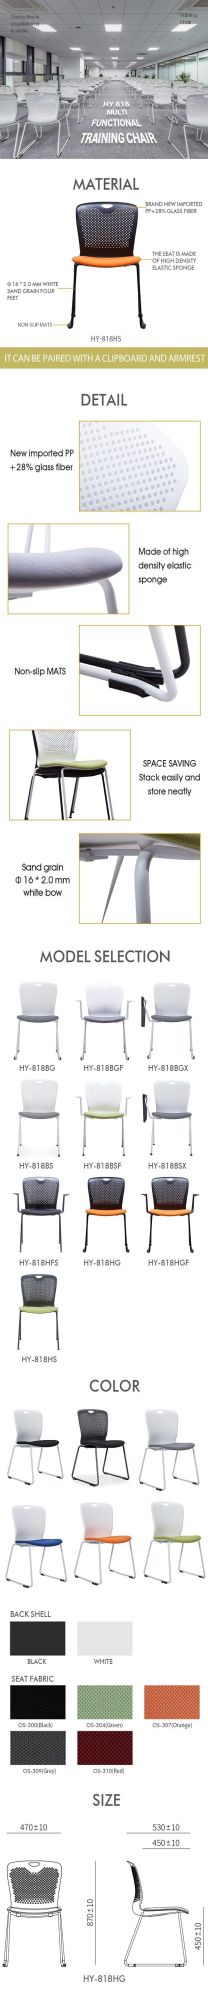 New Design Good Quality Ergonomic Plastic Office Chair